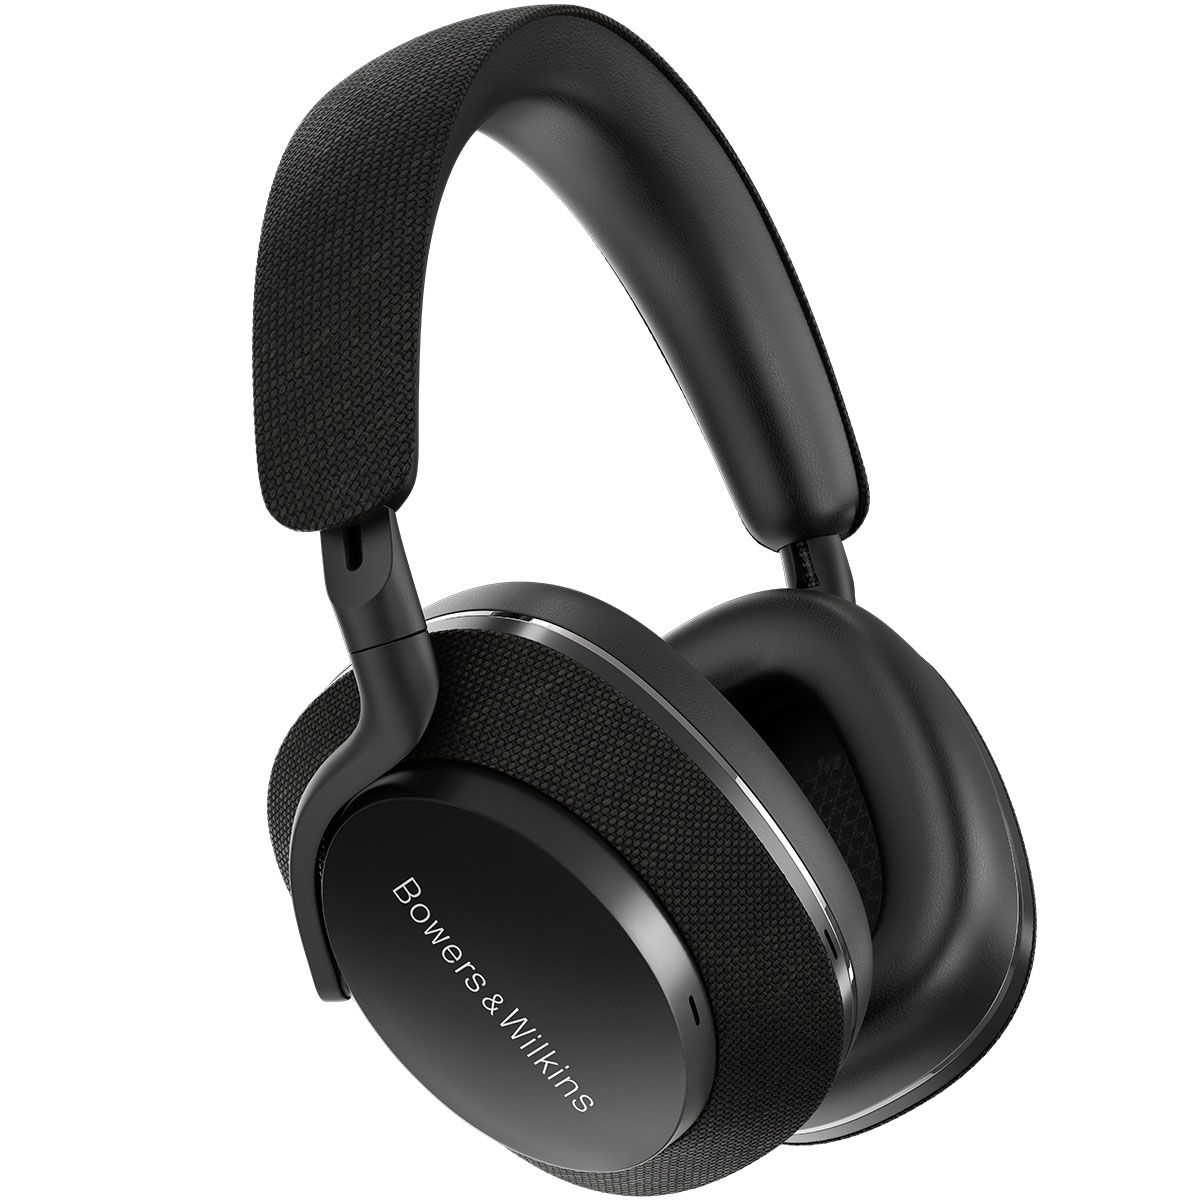 & Wilkins PX7 S2 Wireless Over-Ear | Audio Advice